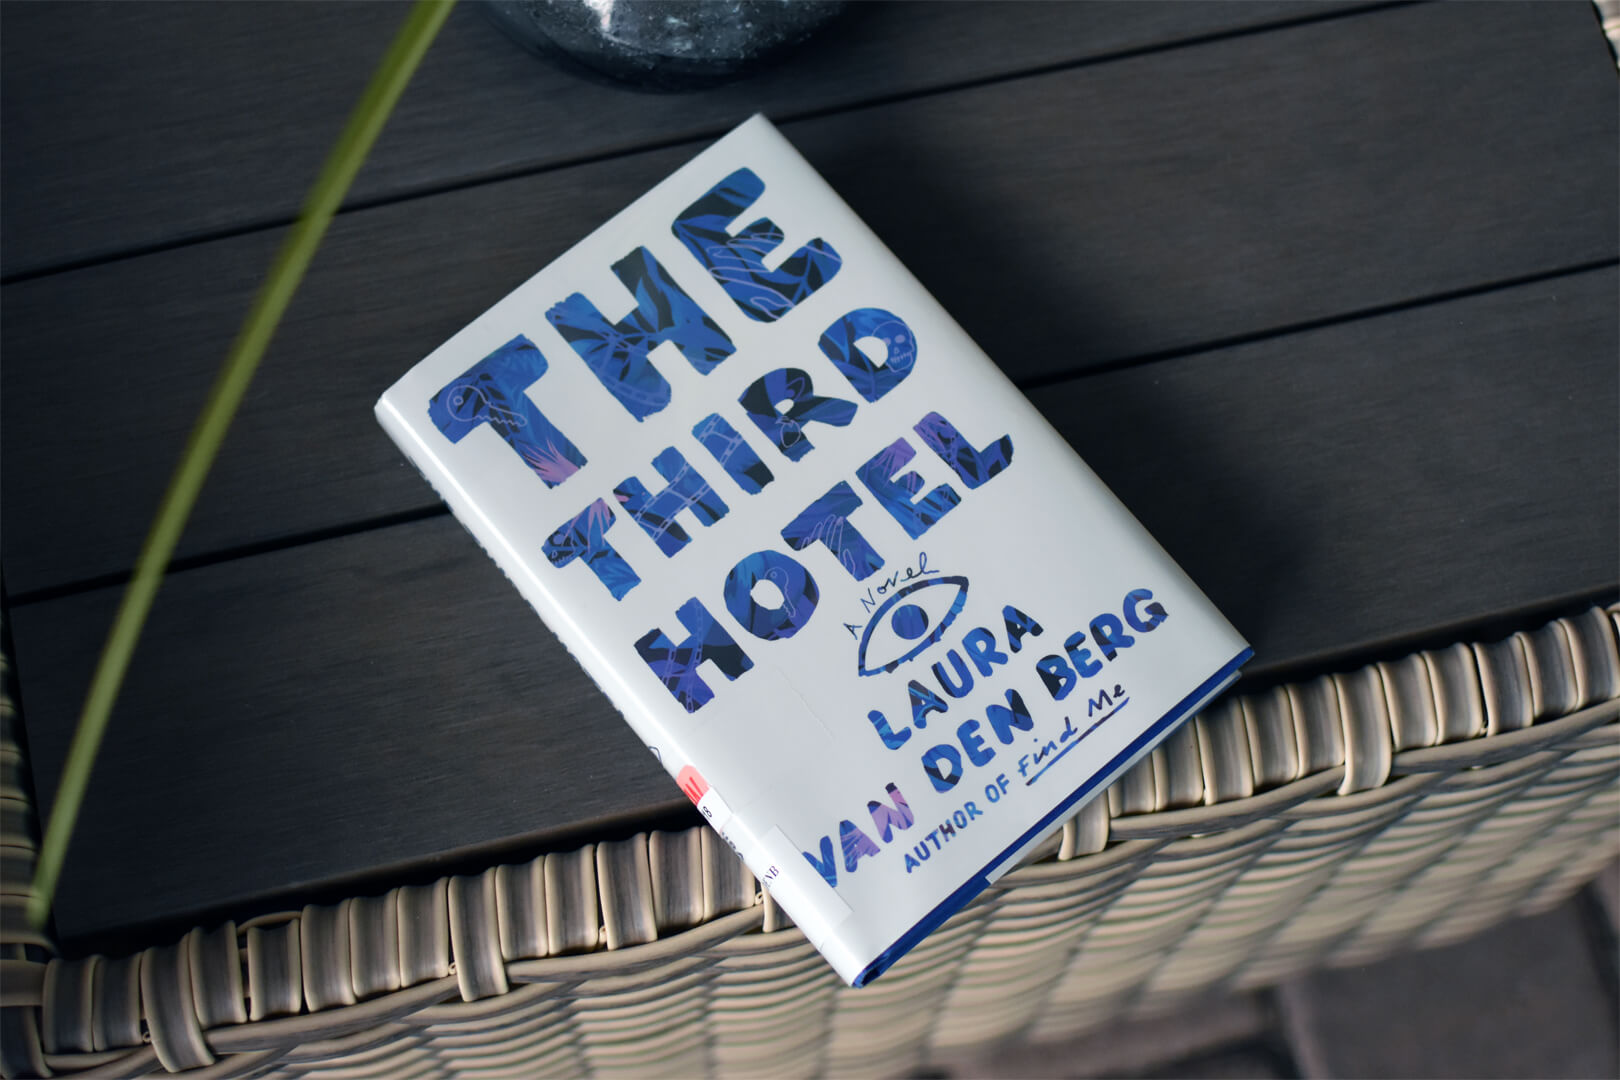 Preview: The Third Hotel by Laura van den Berg